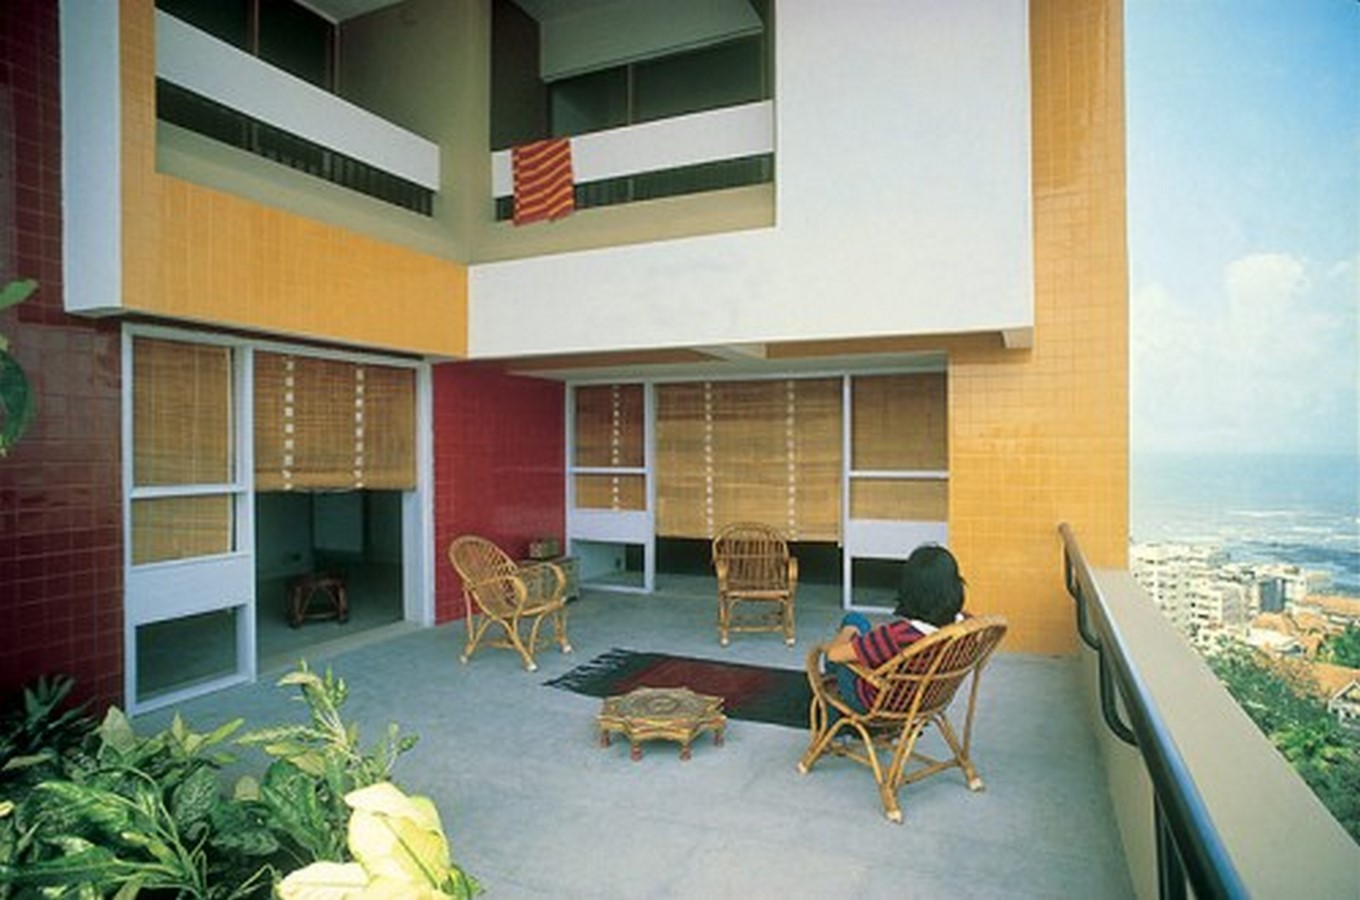 Kanchanjunga Apartments by Charles Correa: The Vertical Bungalows - Sheet3